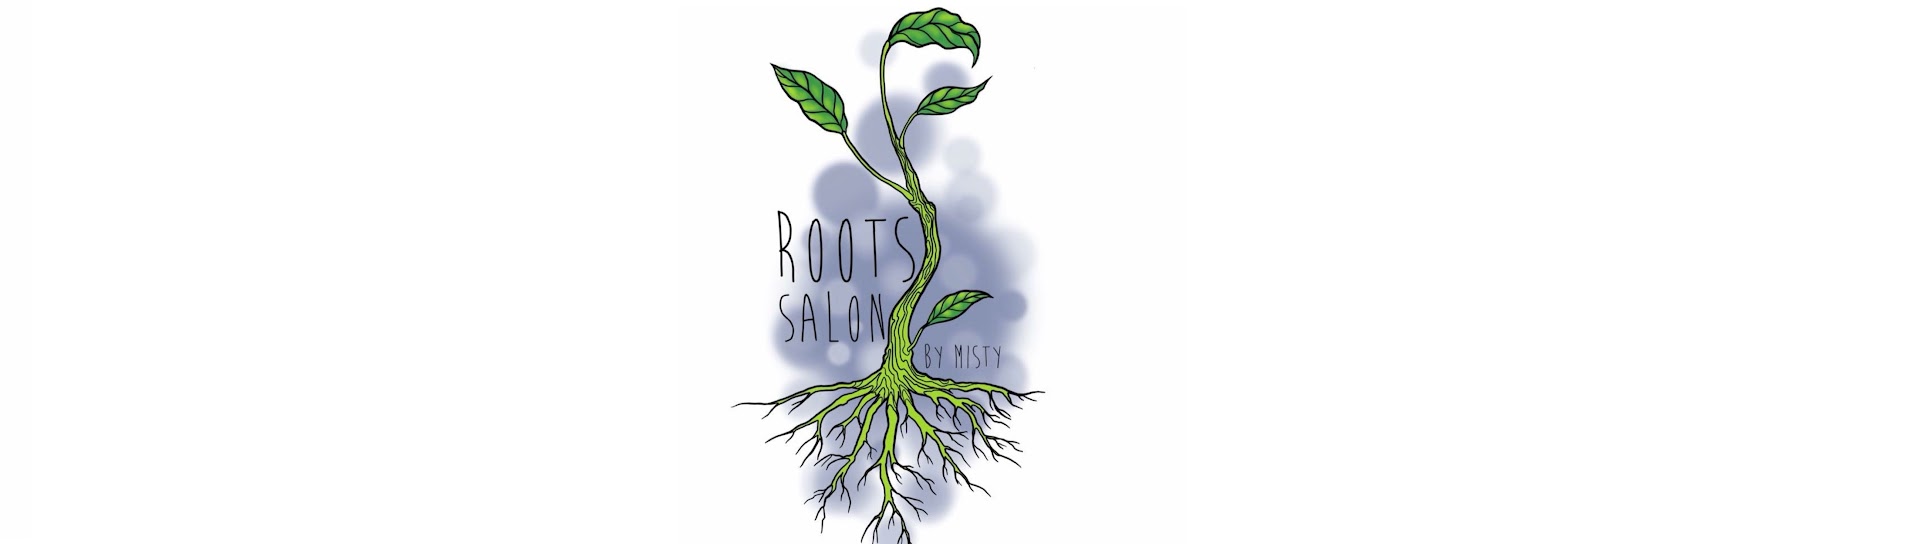 Roots Salon by Misty